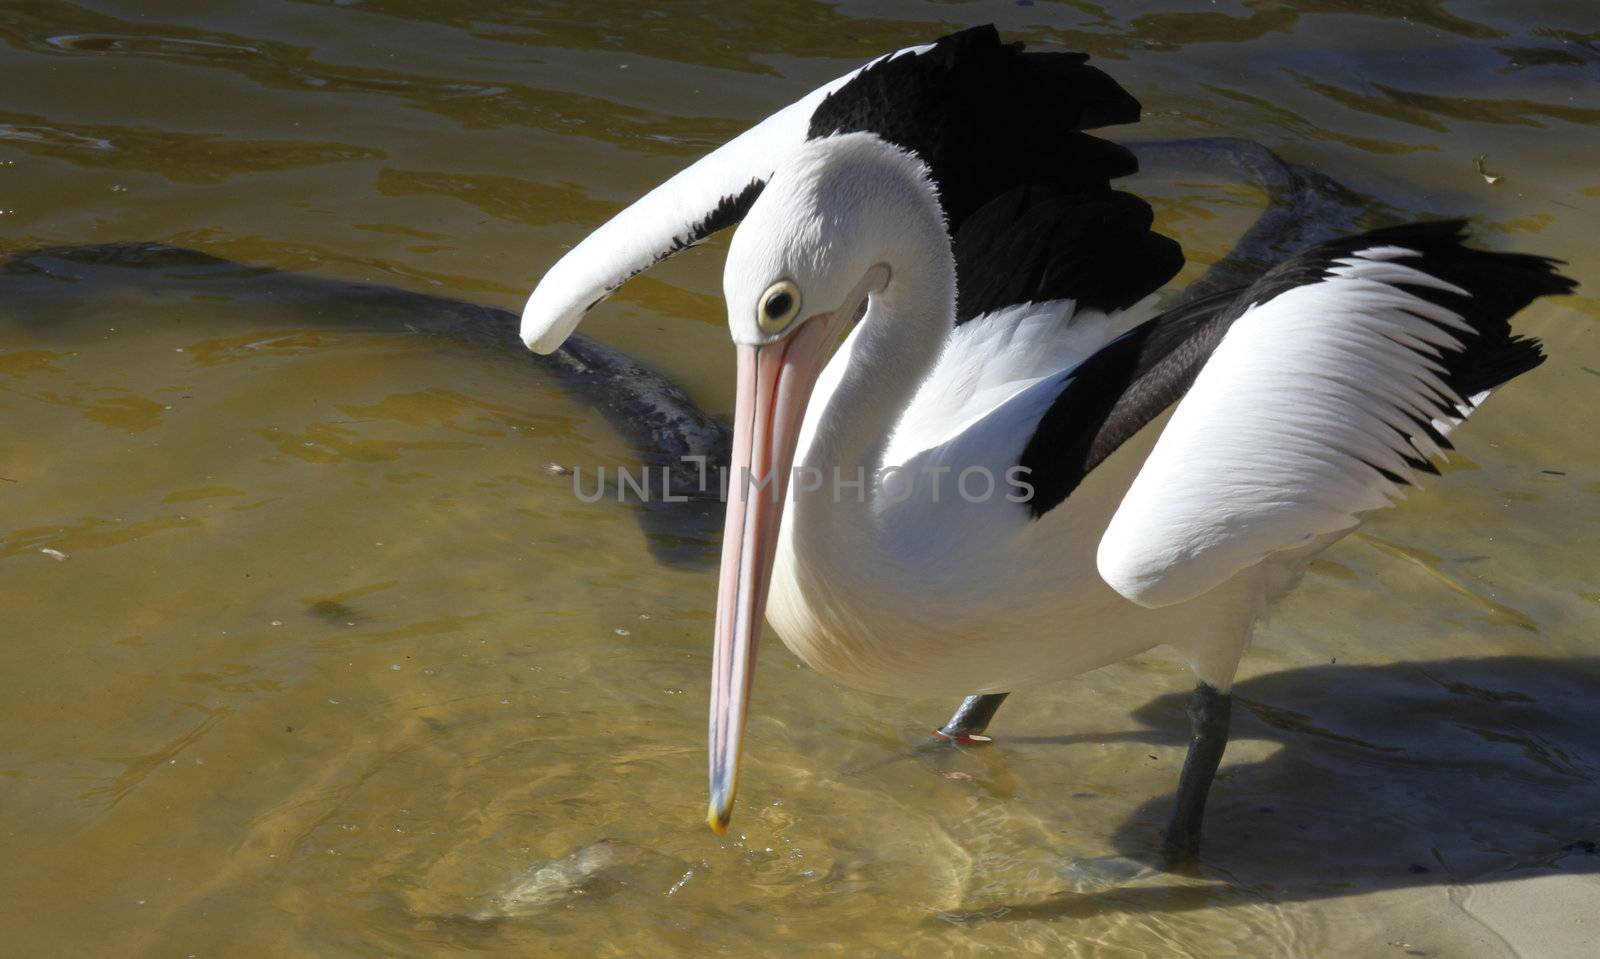 Native Australian Pelican feeding on fish in shallow water